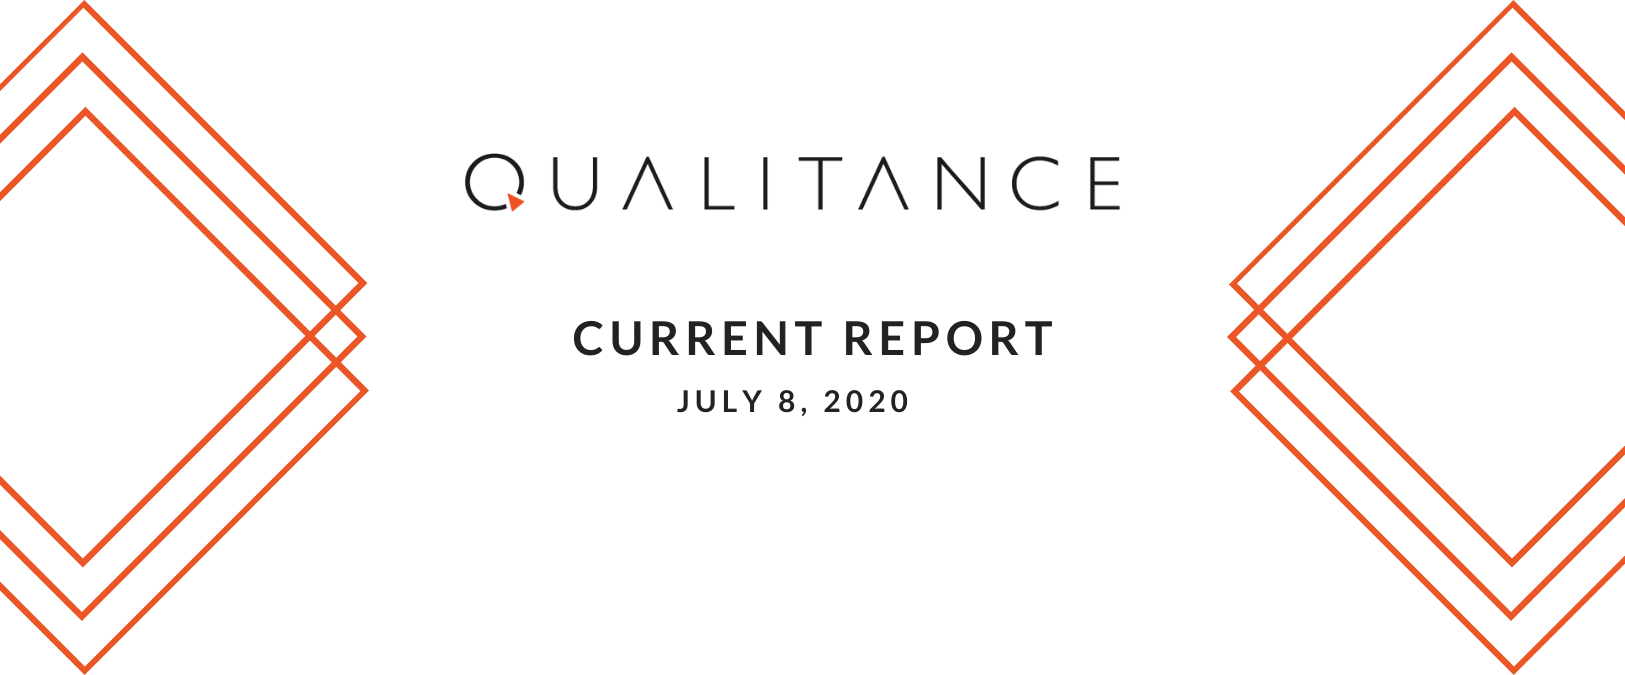 QUALITANCE Current Report July 8 2020